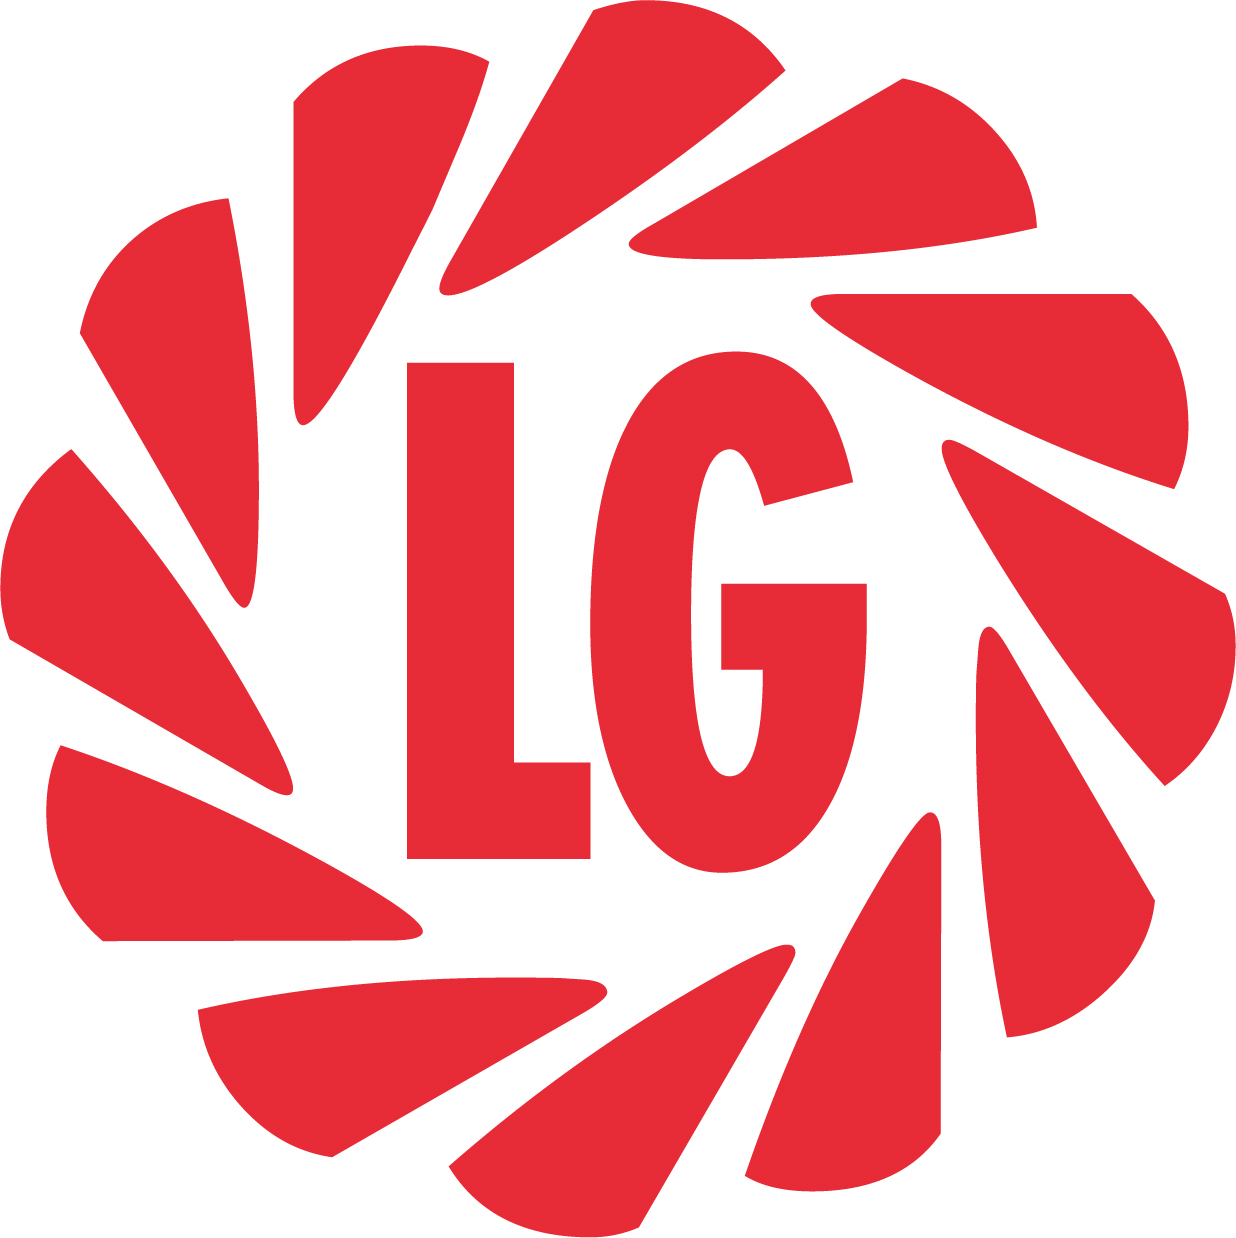 Limagrain logo